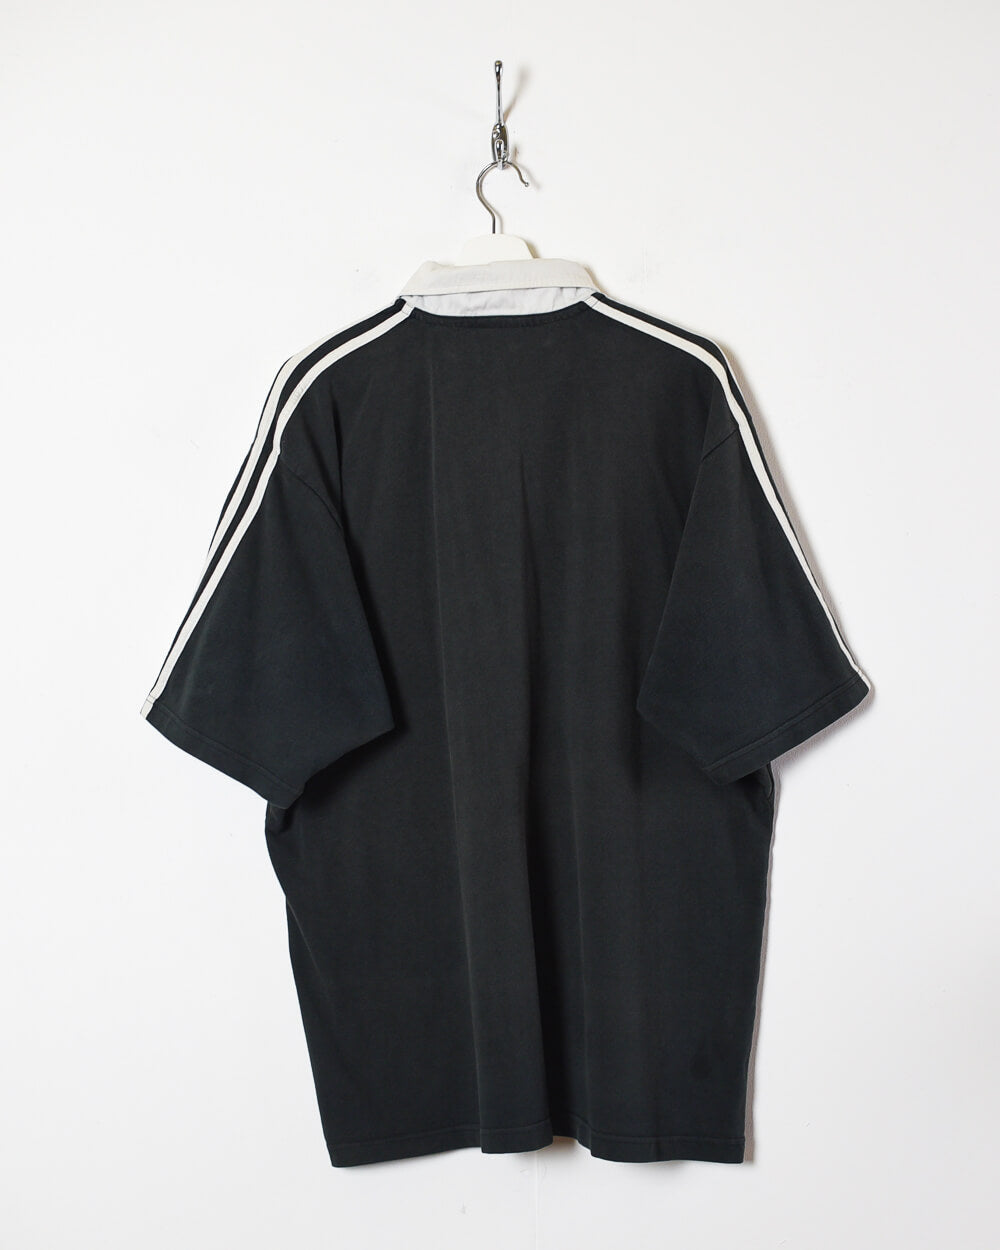 Black Adidas Short Sleeves Rugby Shirt - X-Large